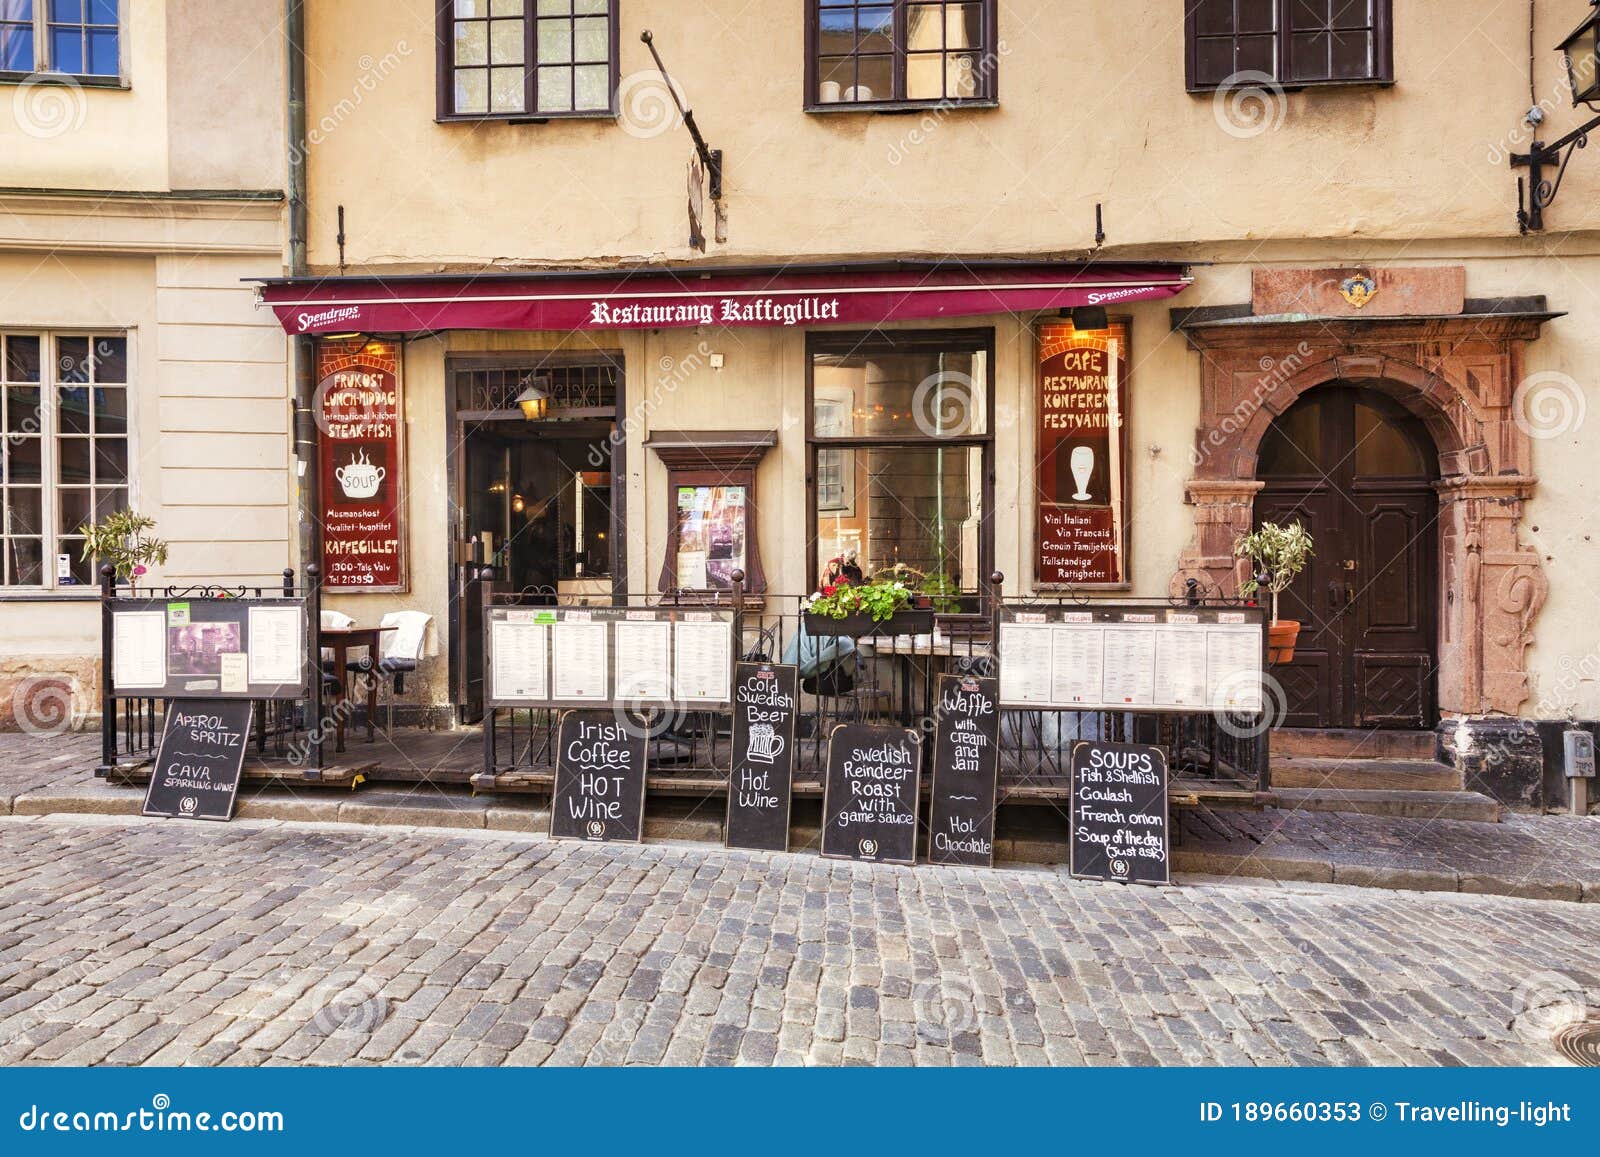 gamla stan stockholm restaurants)